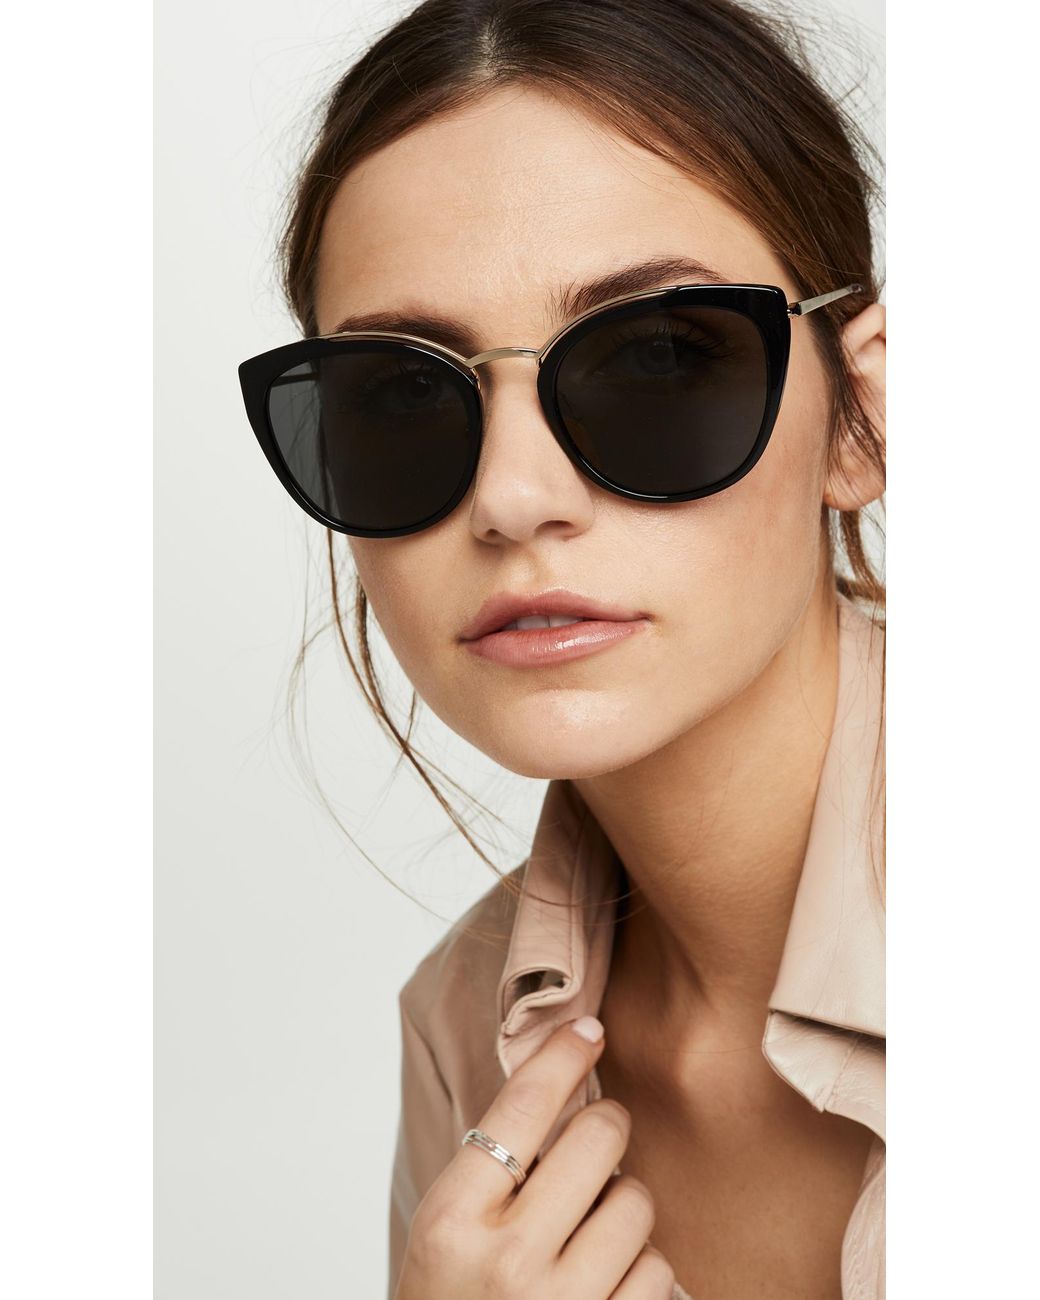 Prada Pr 20us Cat Eye Sunglasses in Black | Lyst